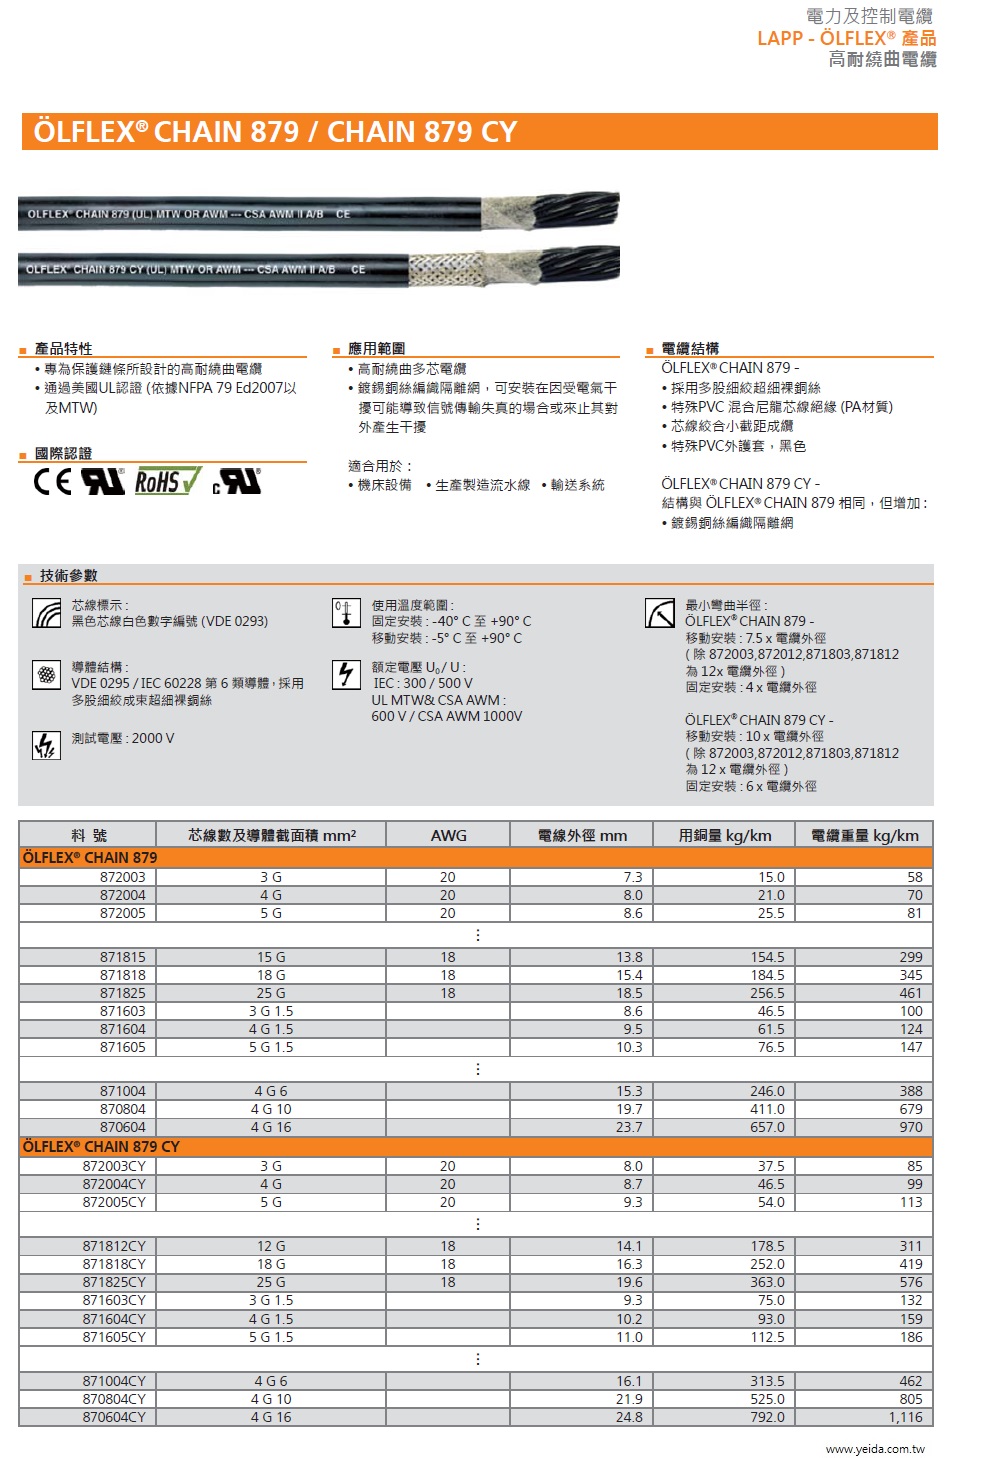 LAPP- OLFLEX®  CHAIN 879 工業級(超柔移動式防污油)連接線PVC insulated, numbered, PVC sheath, approved產品圖